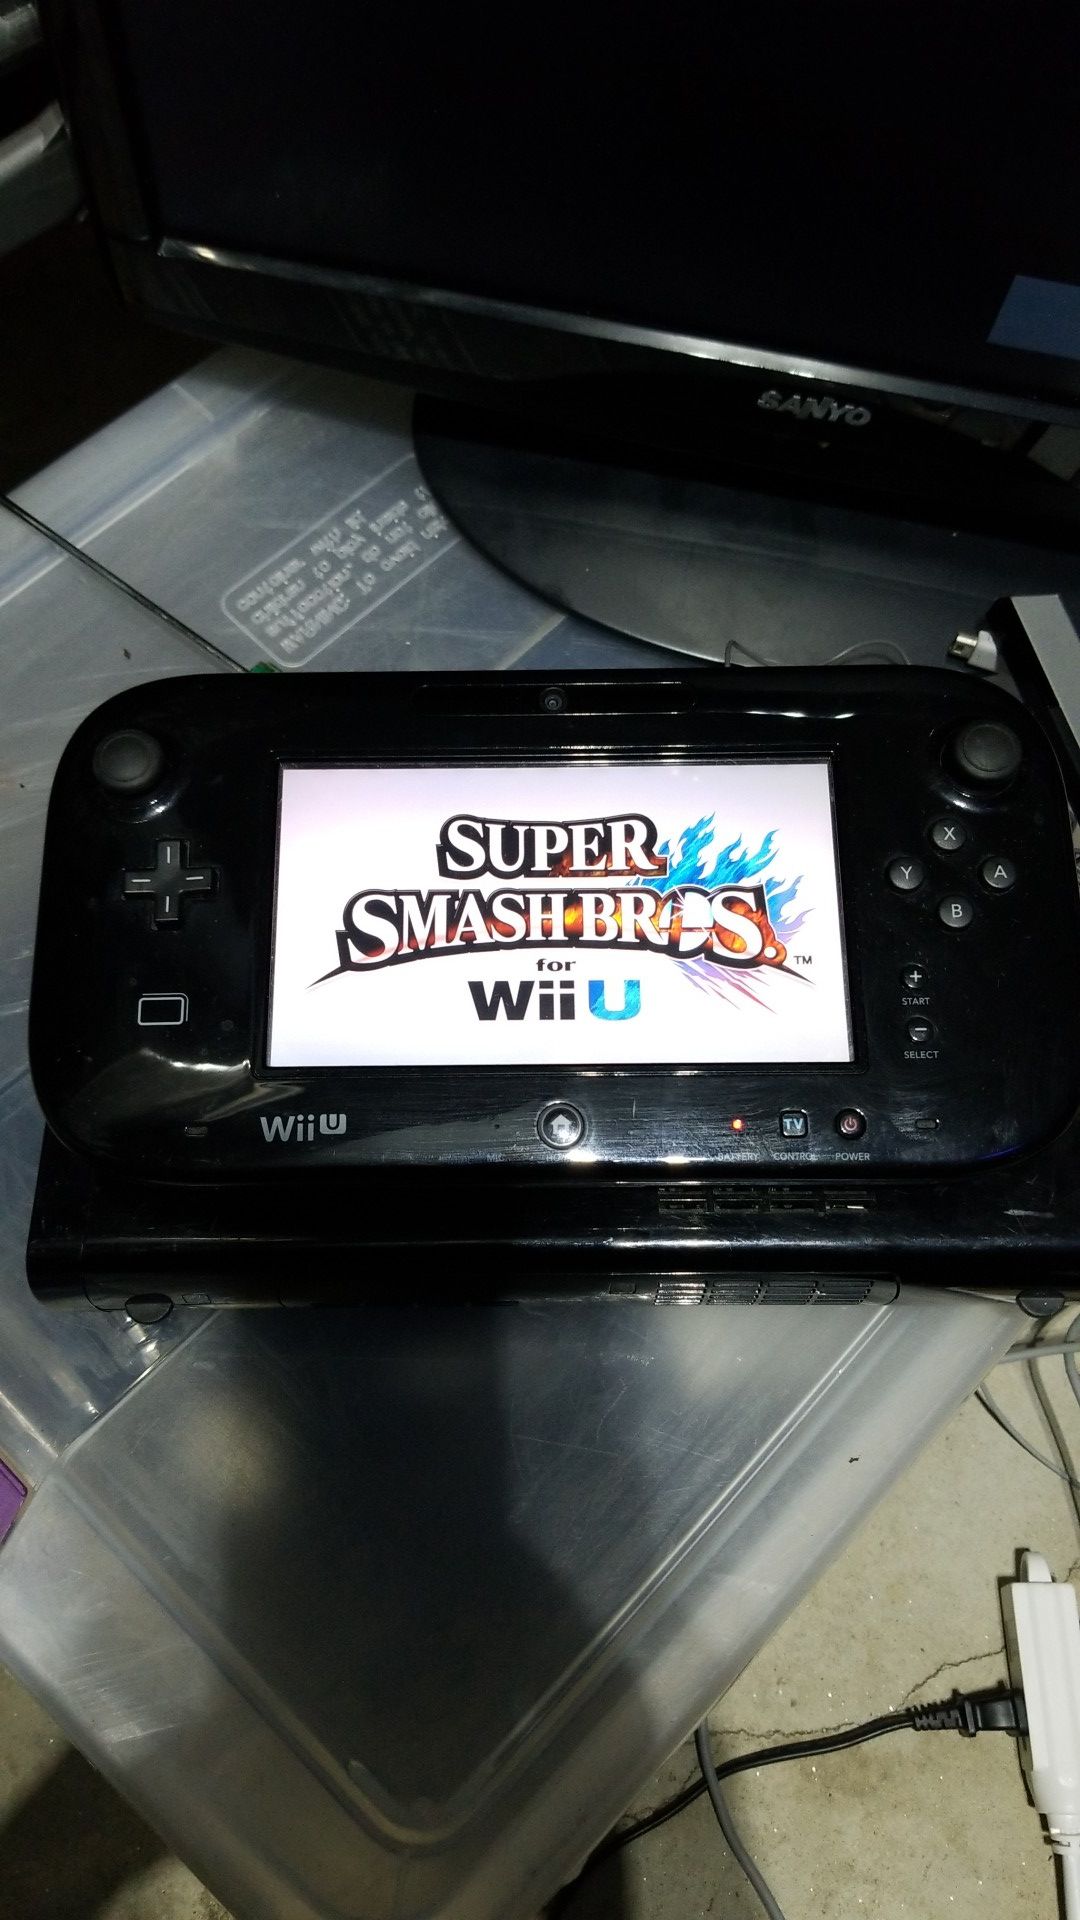 Nintendo Wii U with Super Smash Bros